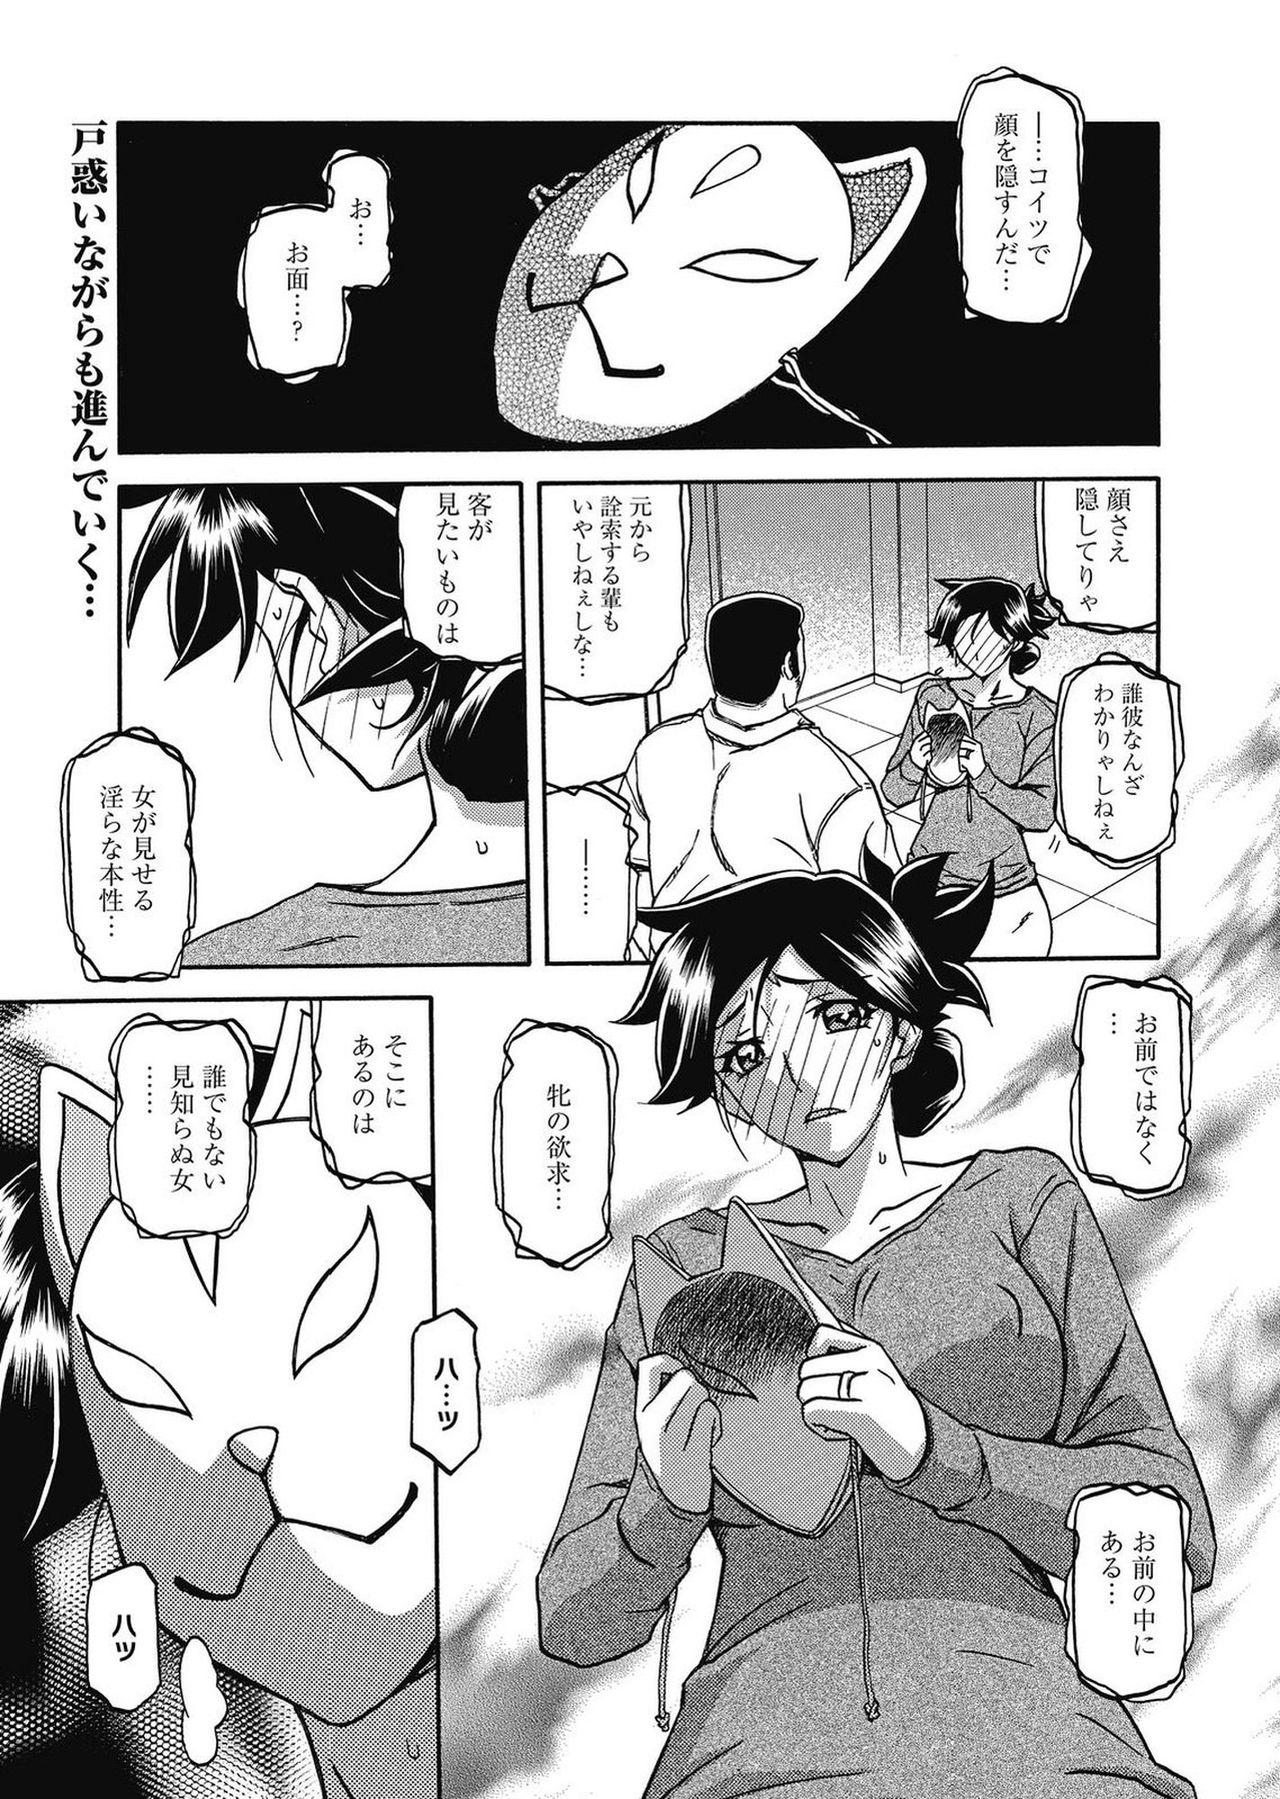 Web Manga Bangaichi Vol. 2 2